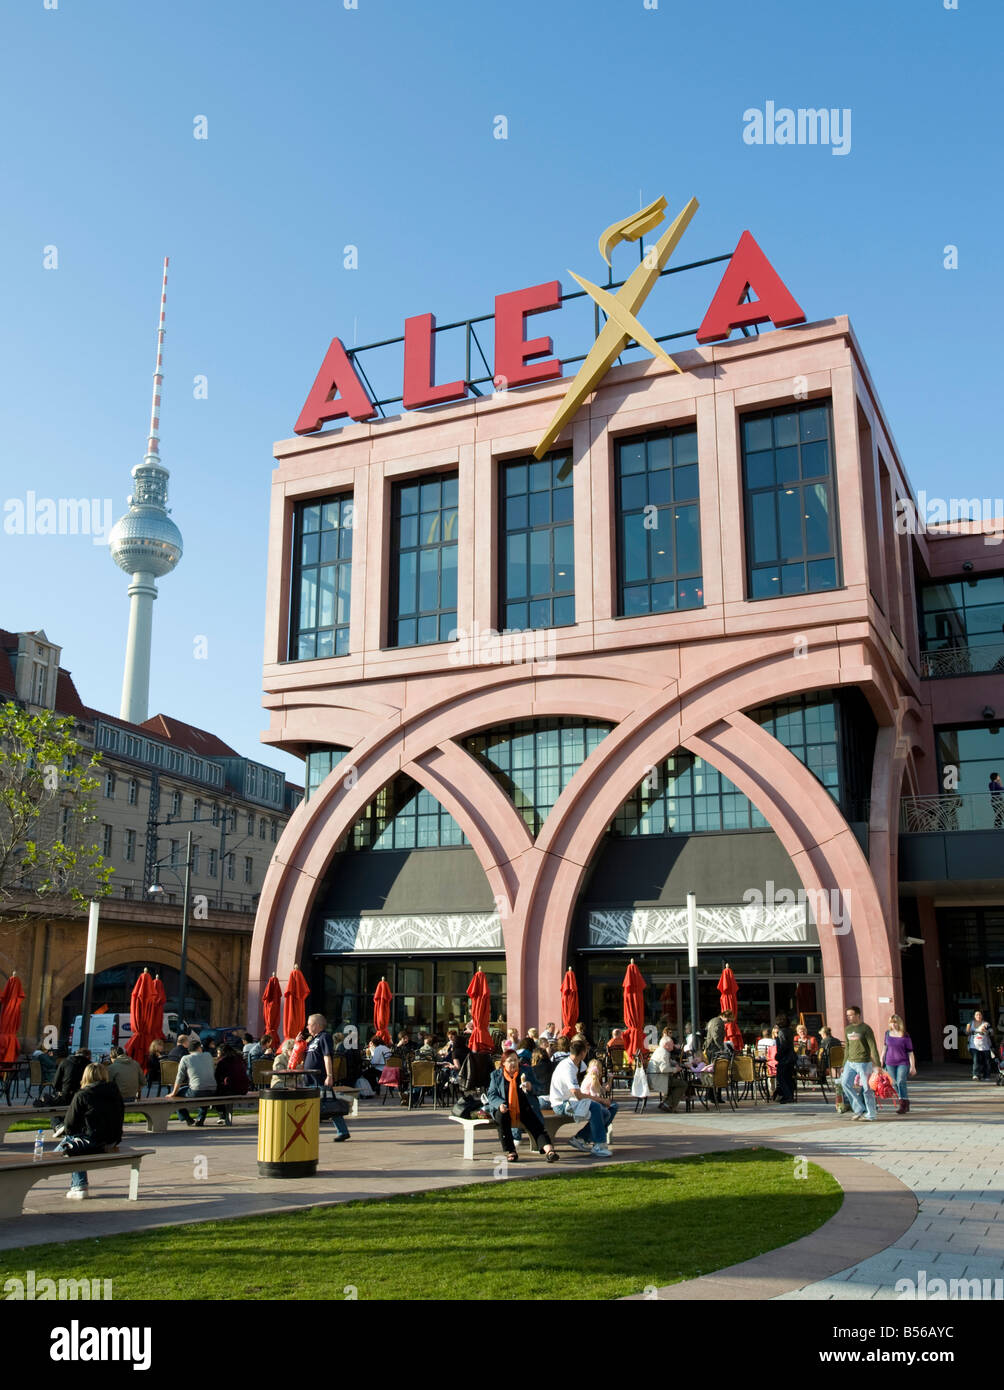 Exterior of new ALEXA shopping mall in Alexanderplatz in Berlin Germany  Stock Photo - Alamy